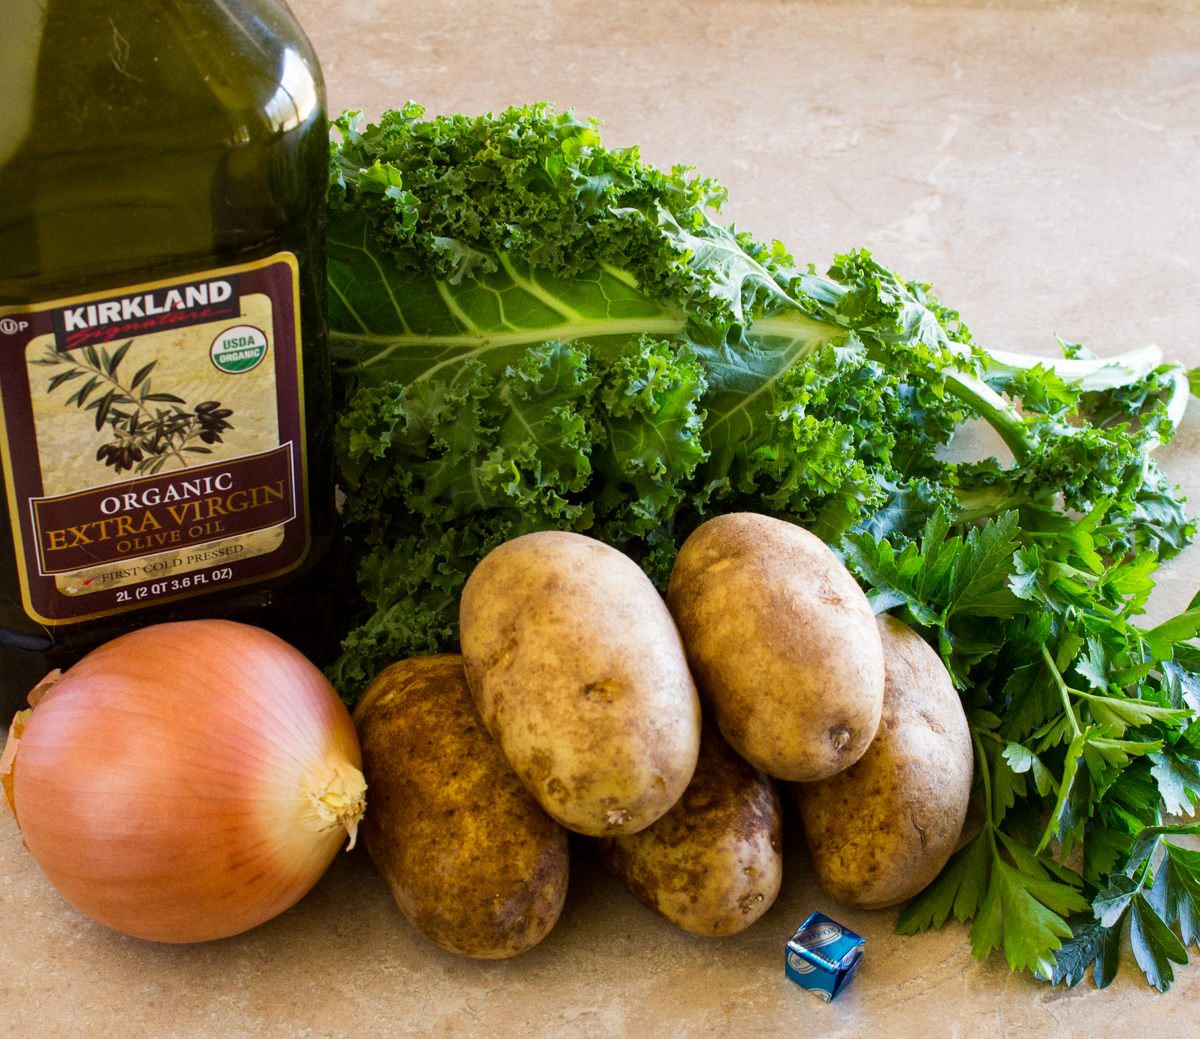 Ingredients for soup kale potatoes parsley onion olive oil bouillon